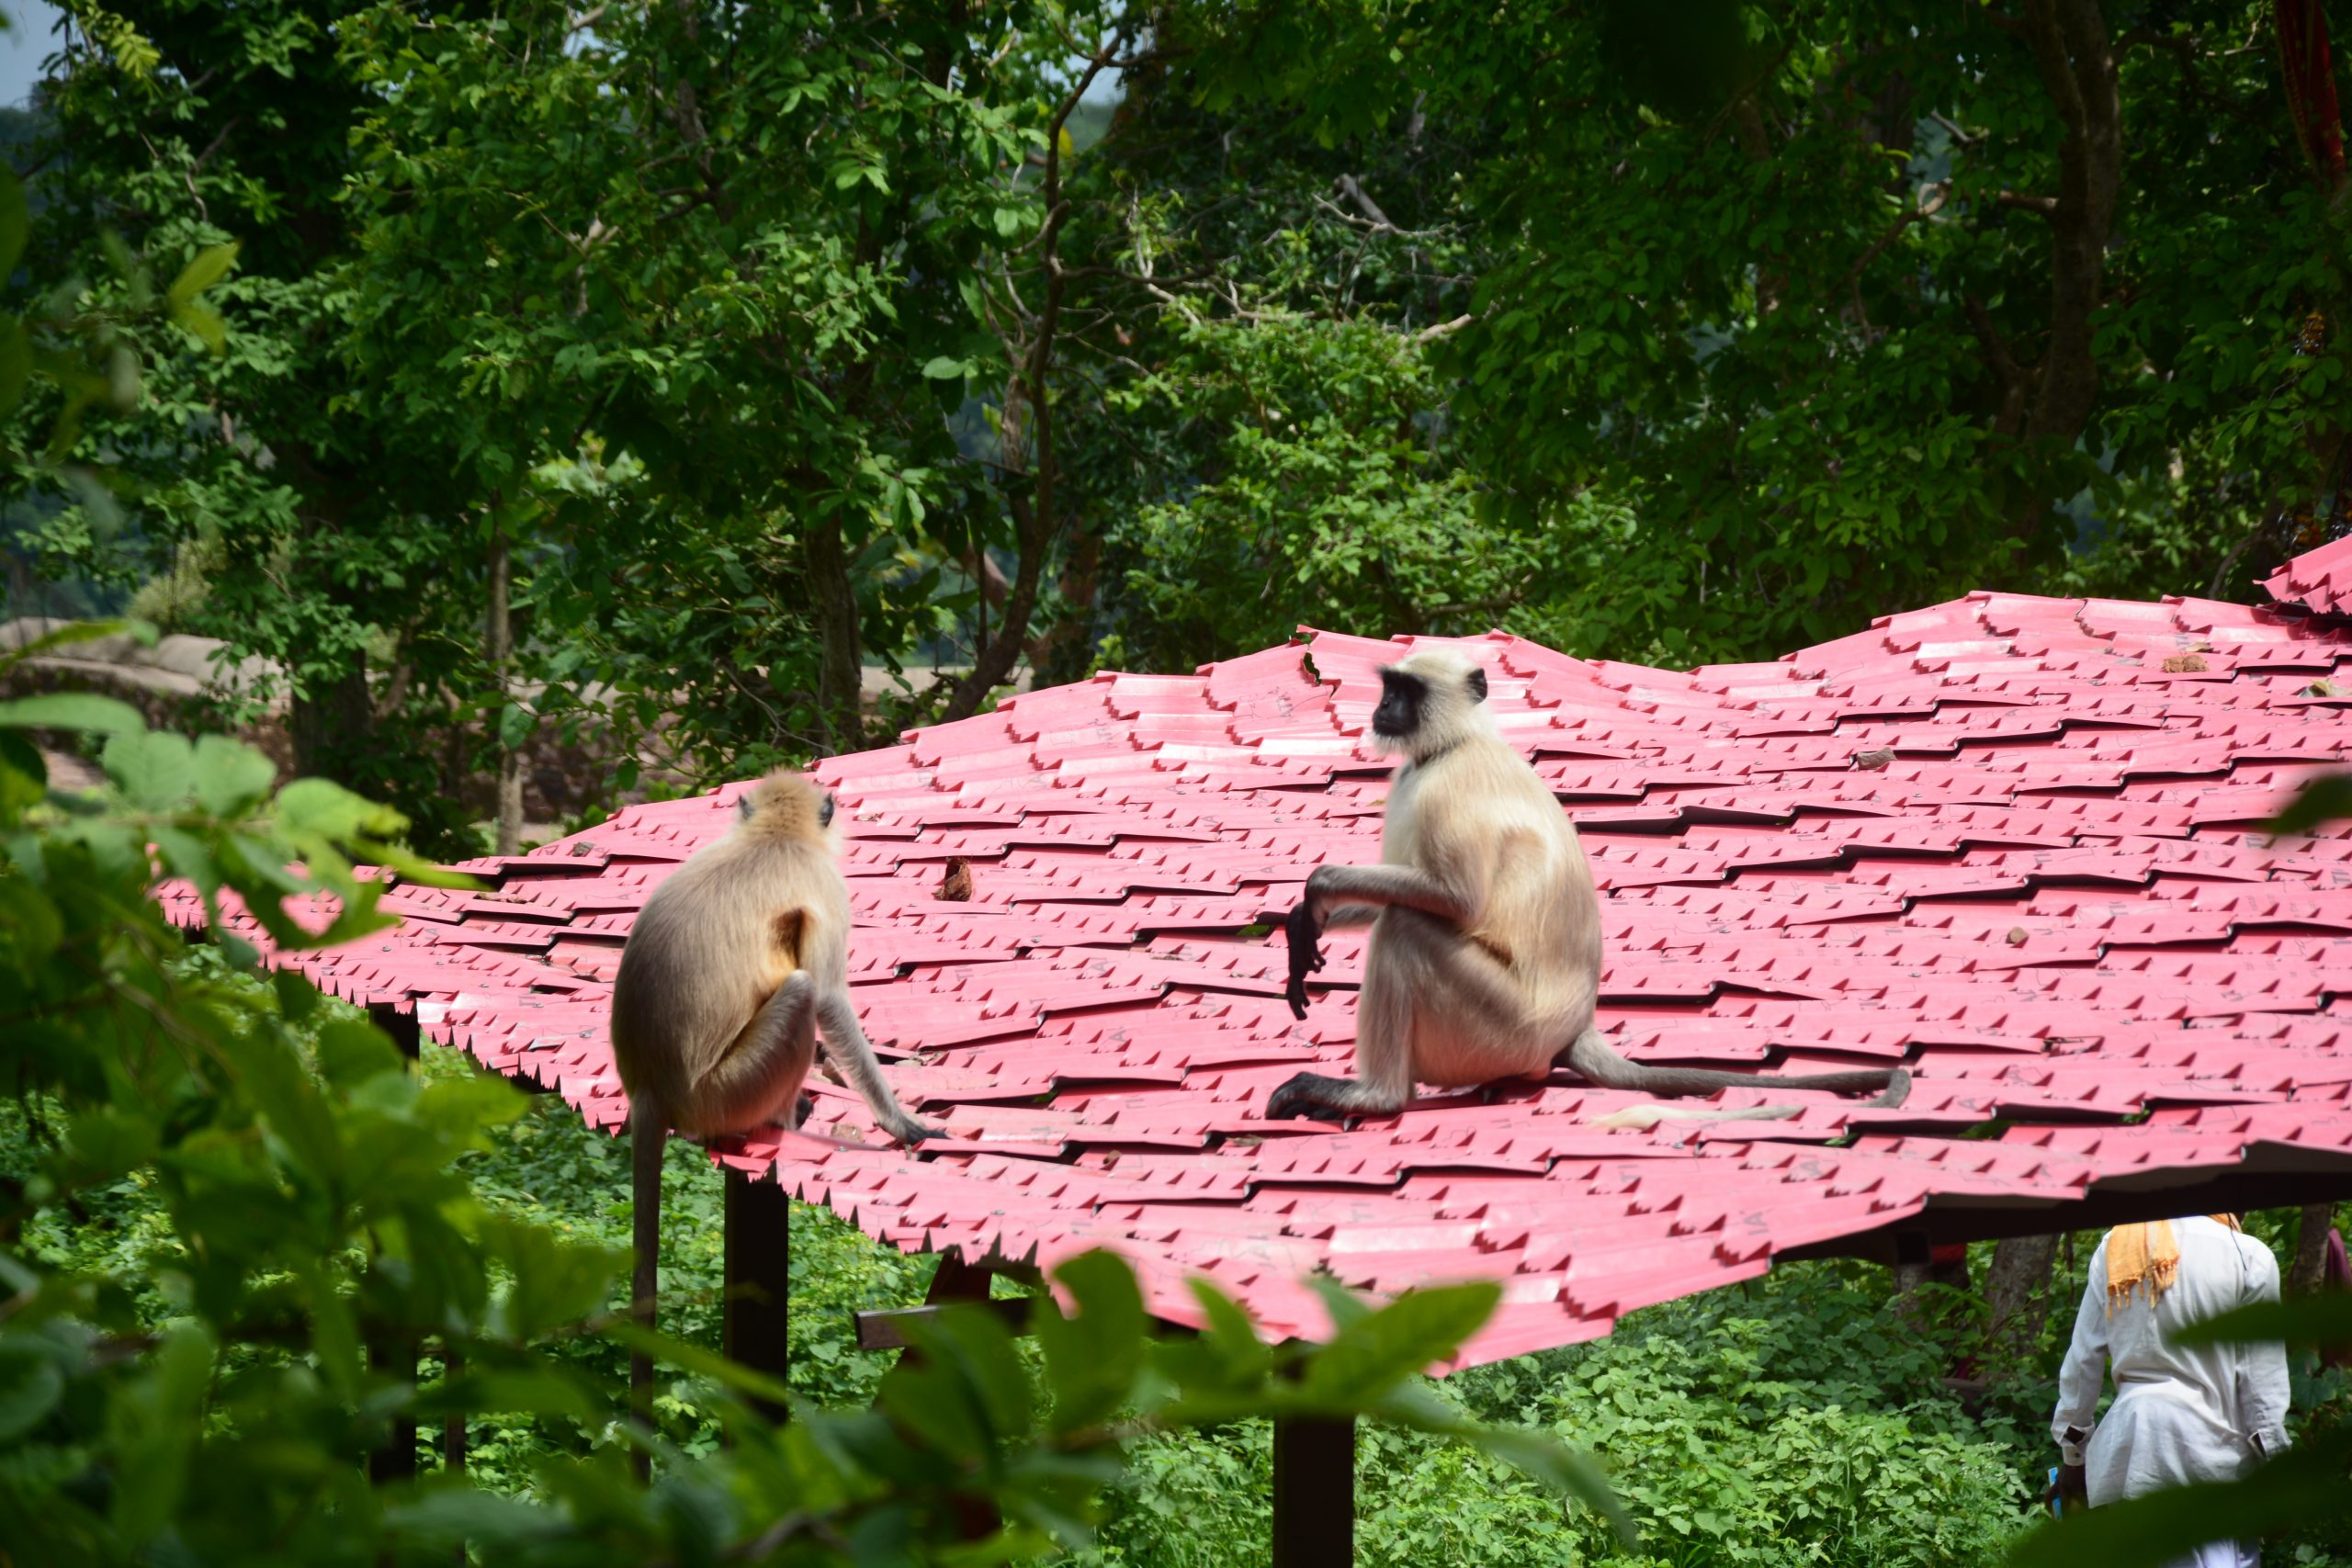 Monkeys sitting on a roof